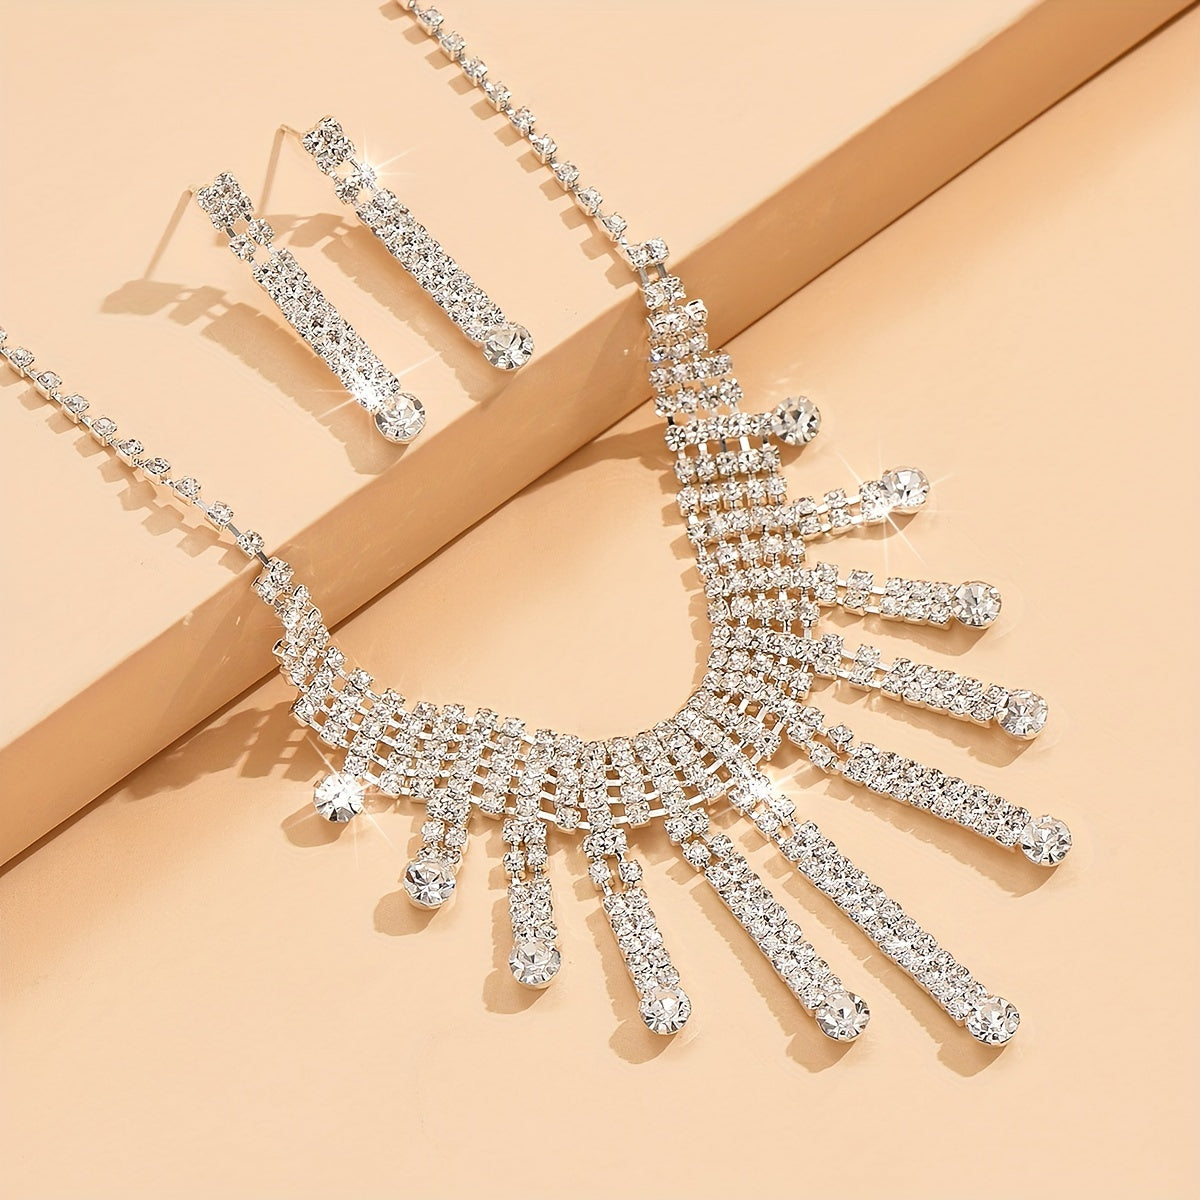 3pcs Earrings Plus Necklace Elegant Jewelry Set Silver Plated Inlaid Rhinestone Long Tassel Design Dainty Evening Party Decor